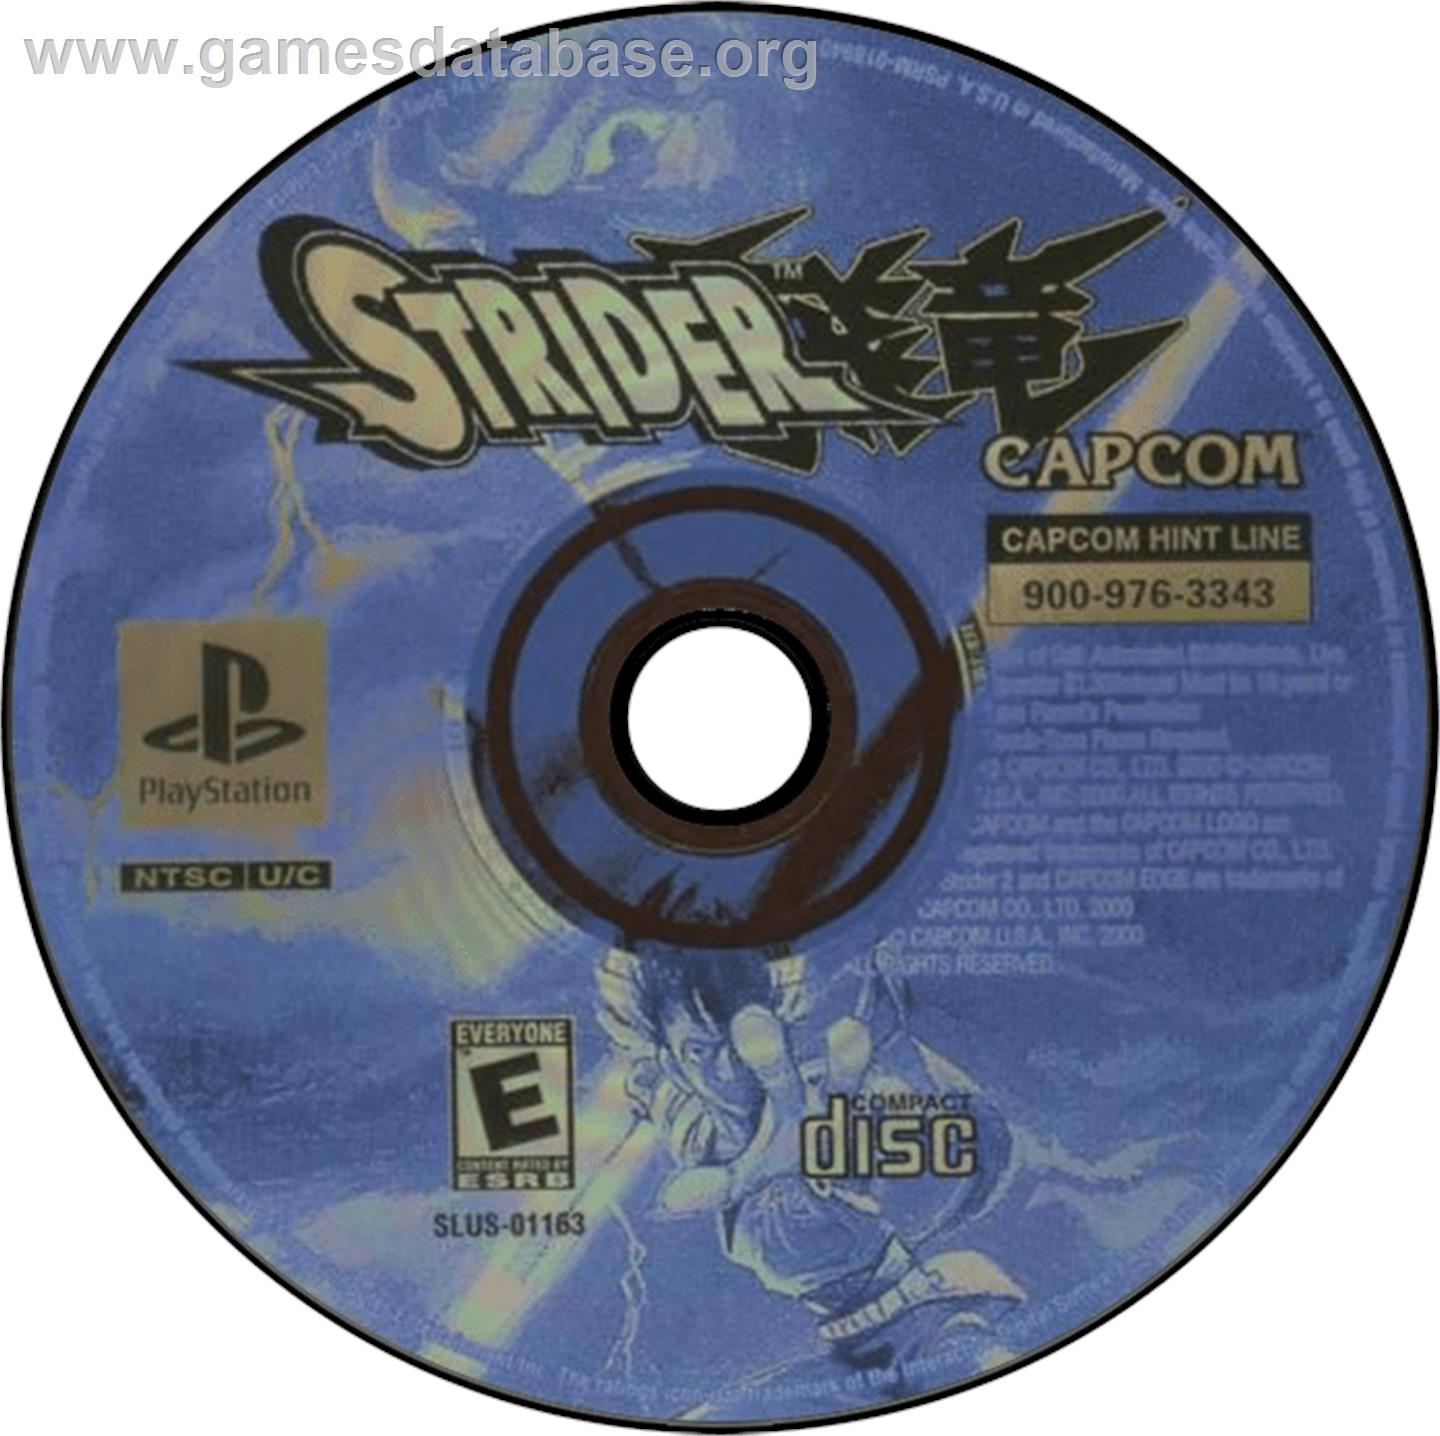 Strider - Sony Playstation - Artwork - Disc